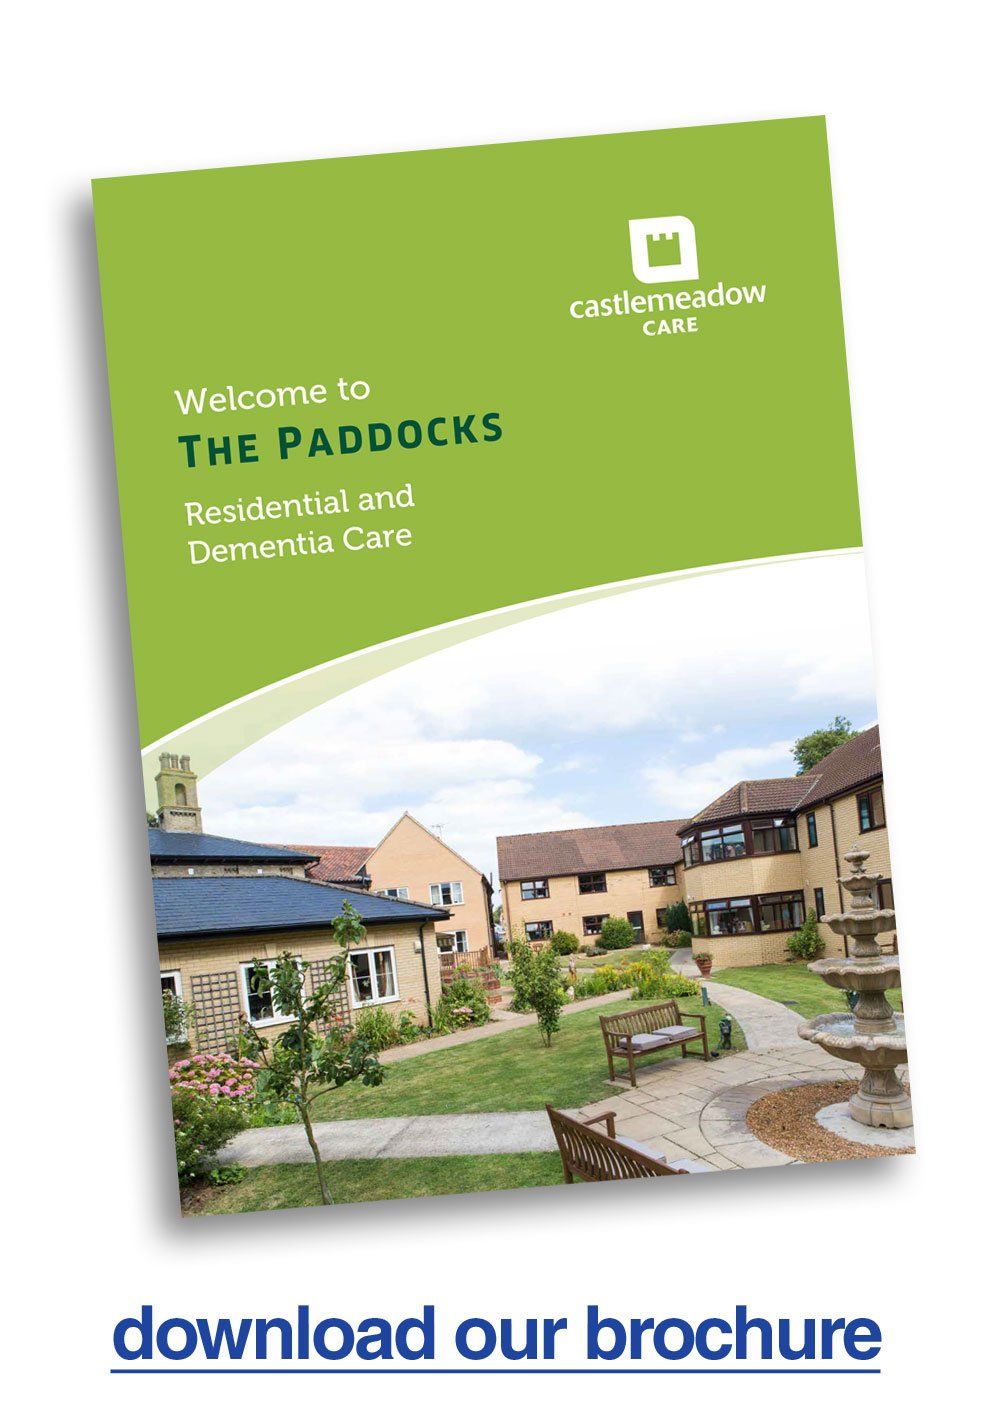 The paddocks brochure